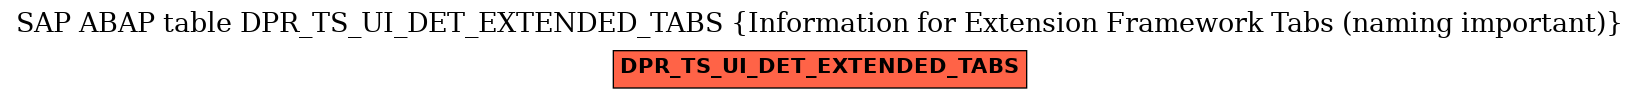 E-R Diagram for table DPR_TS_UI_DET_EXTENDED_TABS (Information for Extension Framework Tabs (naming important))